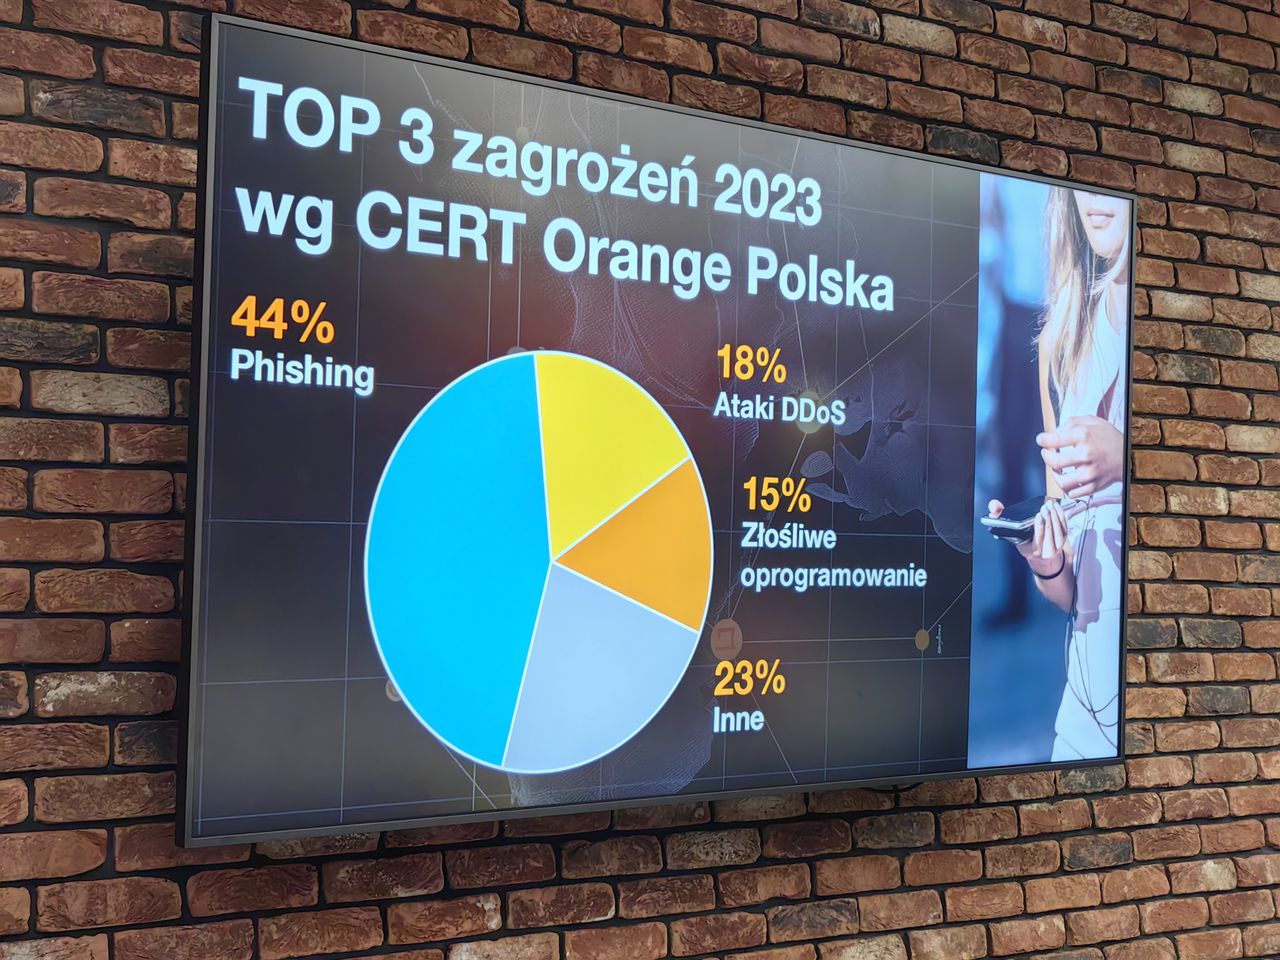 TOP 3 zagrożeń 2023 wg CERT Orange Polska